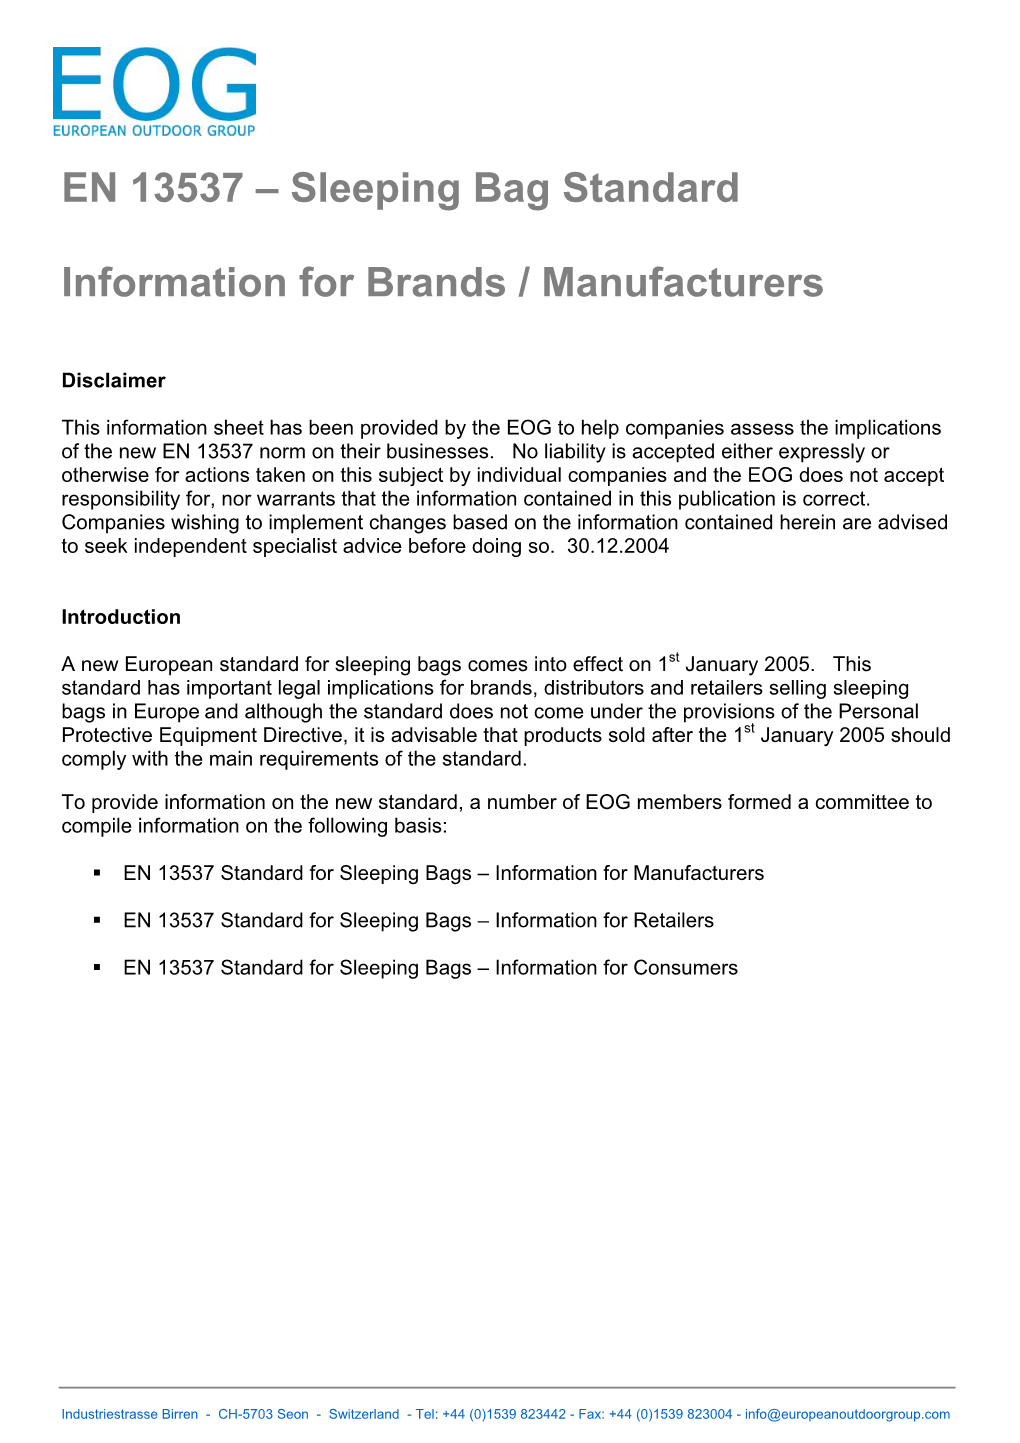 EN13537 Info for Manufacturers